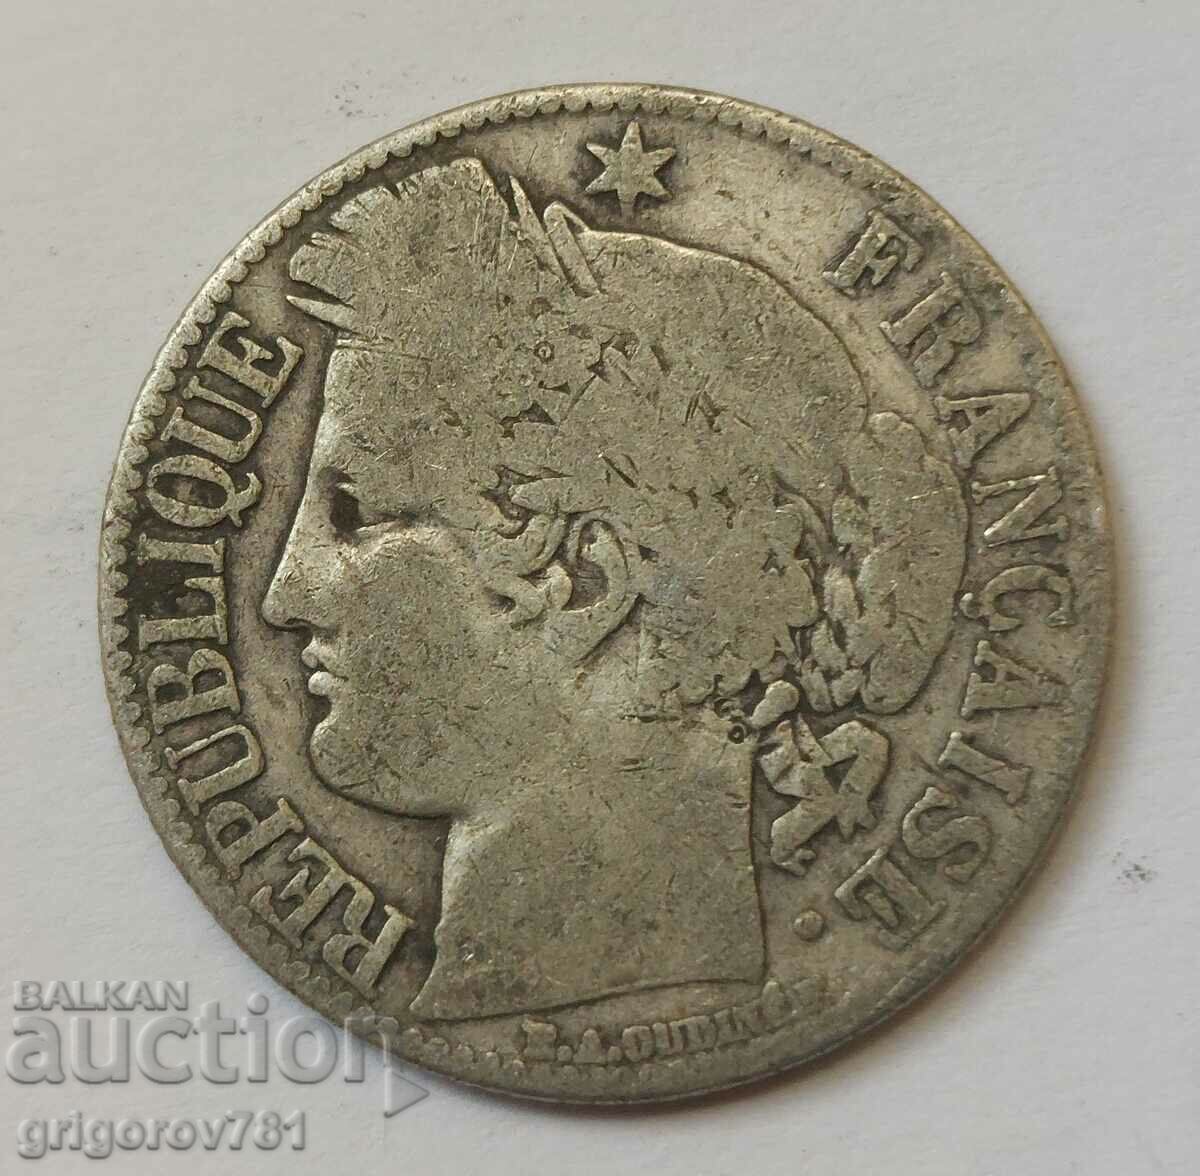 1 Franc Silver France 1872 A - Silver Coin #45